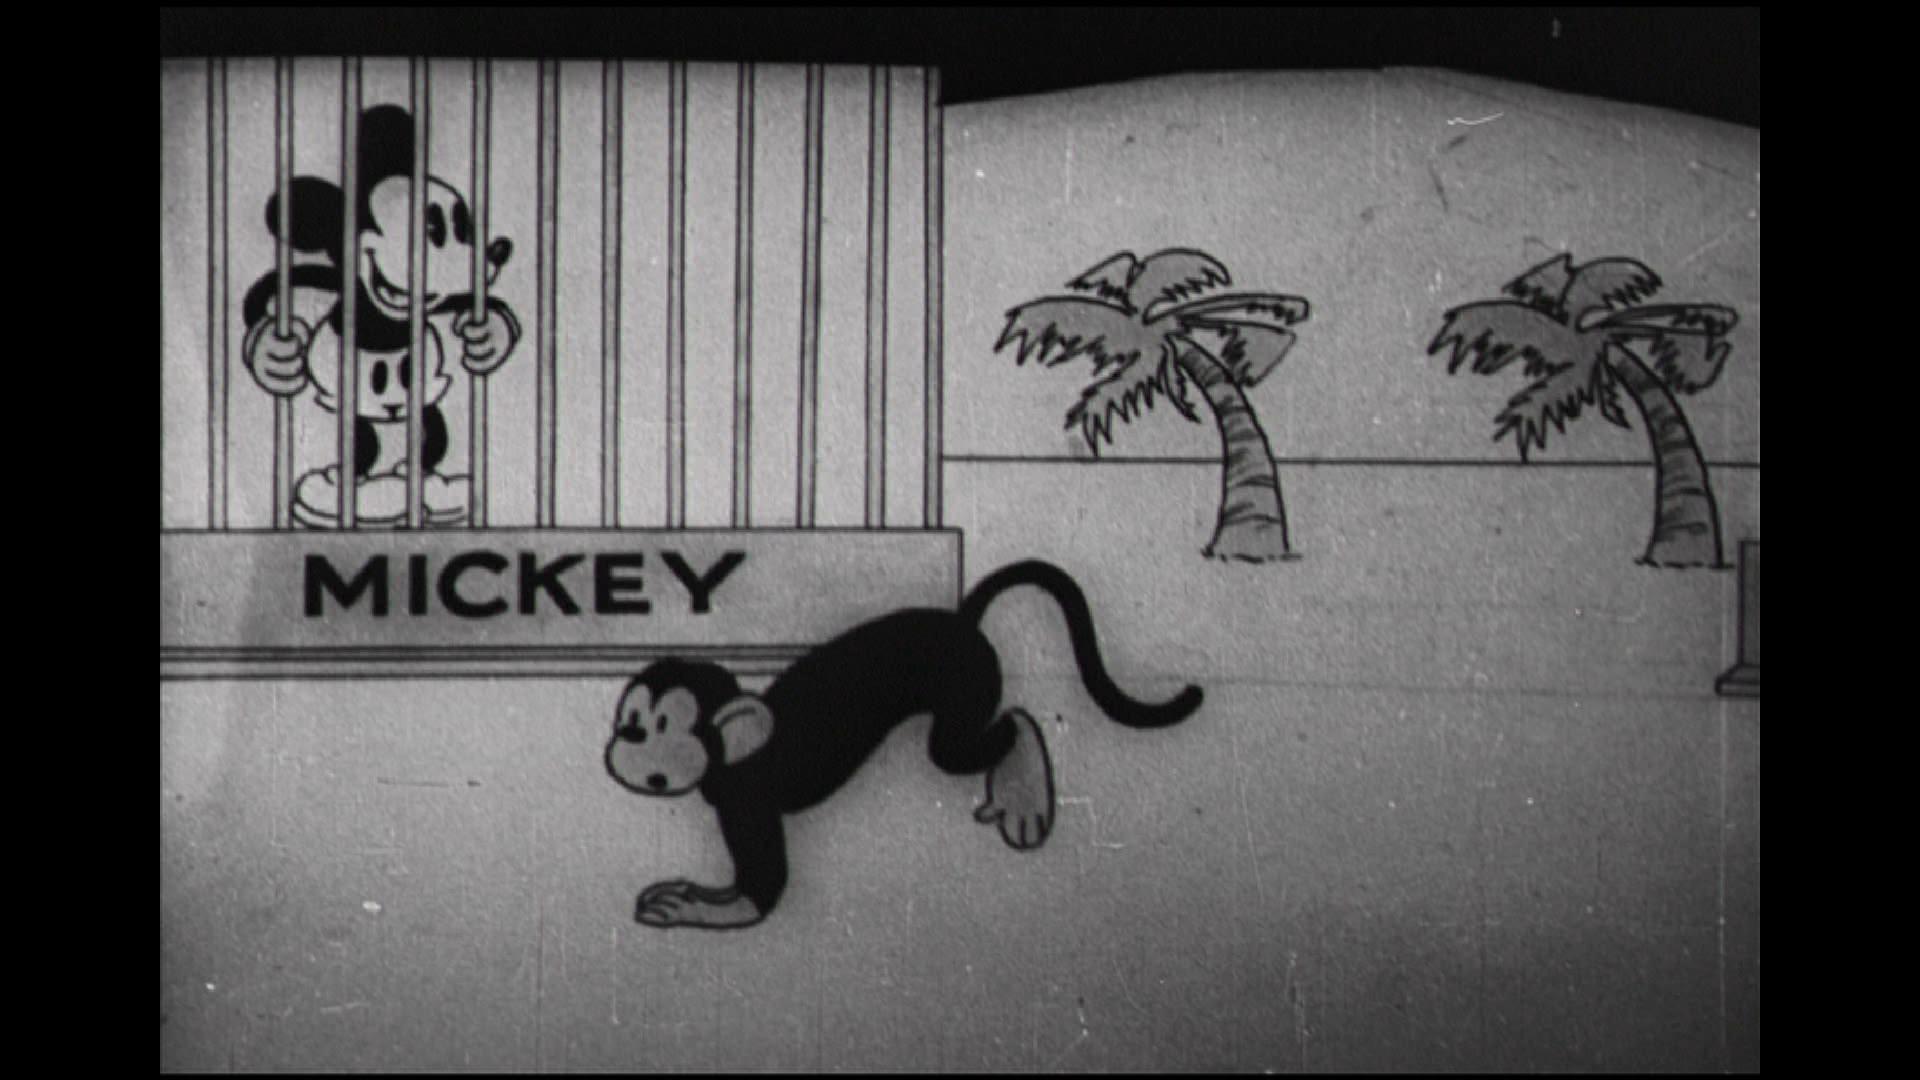 Macaco Feio Macaco Bonito (Short 1929) - IMDb